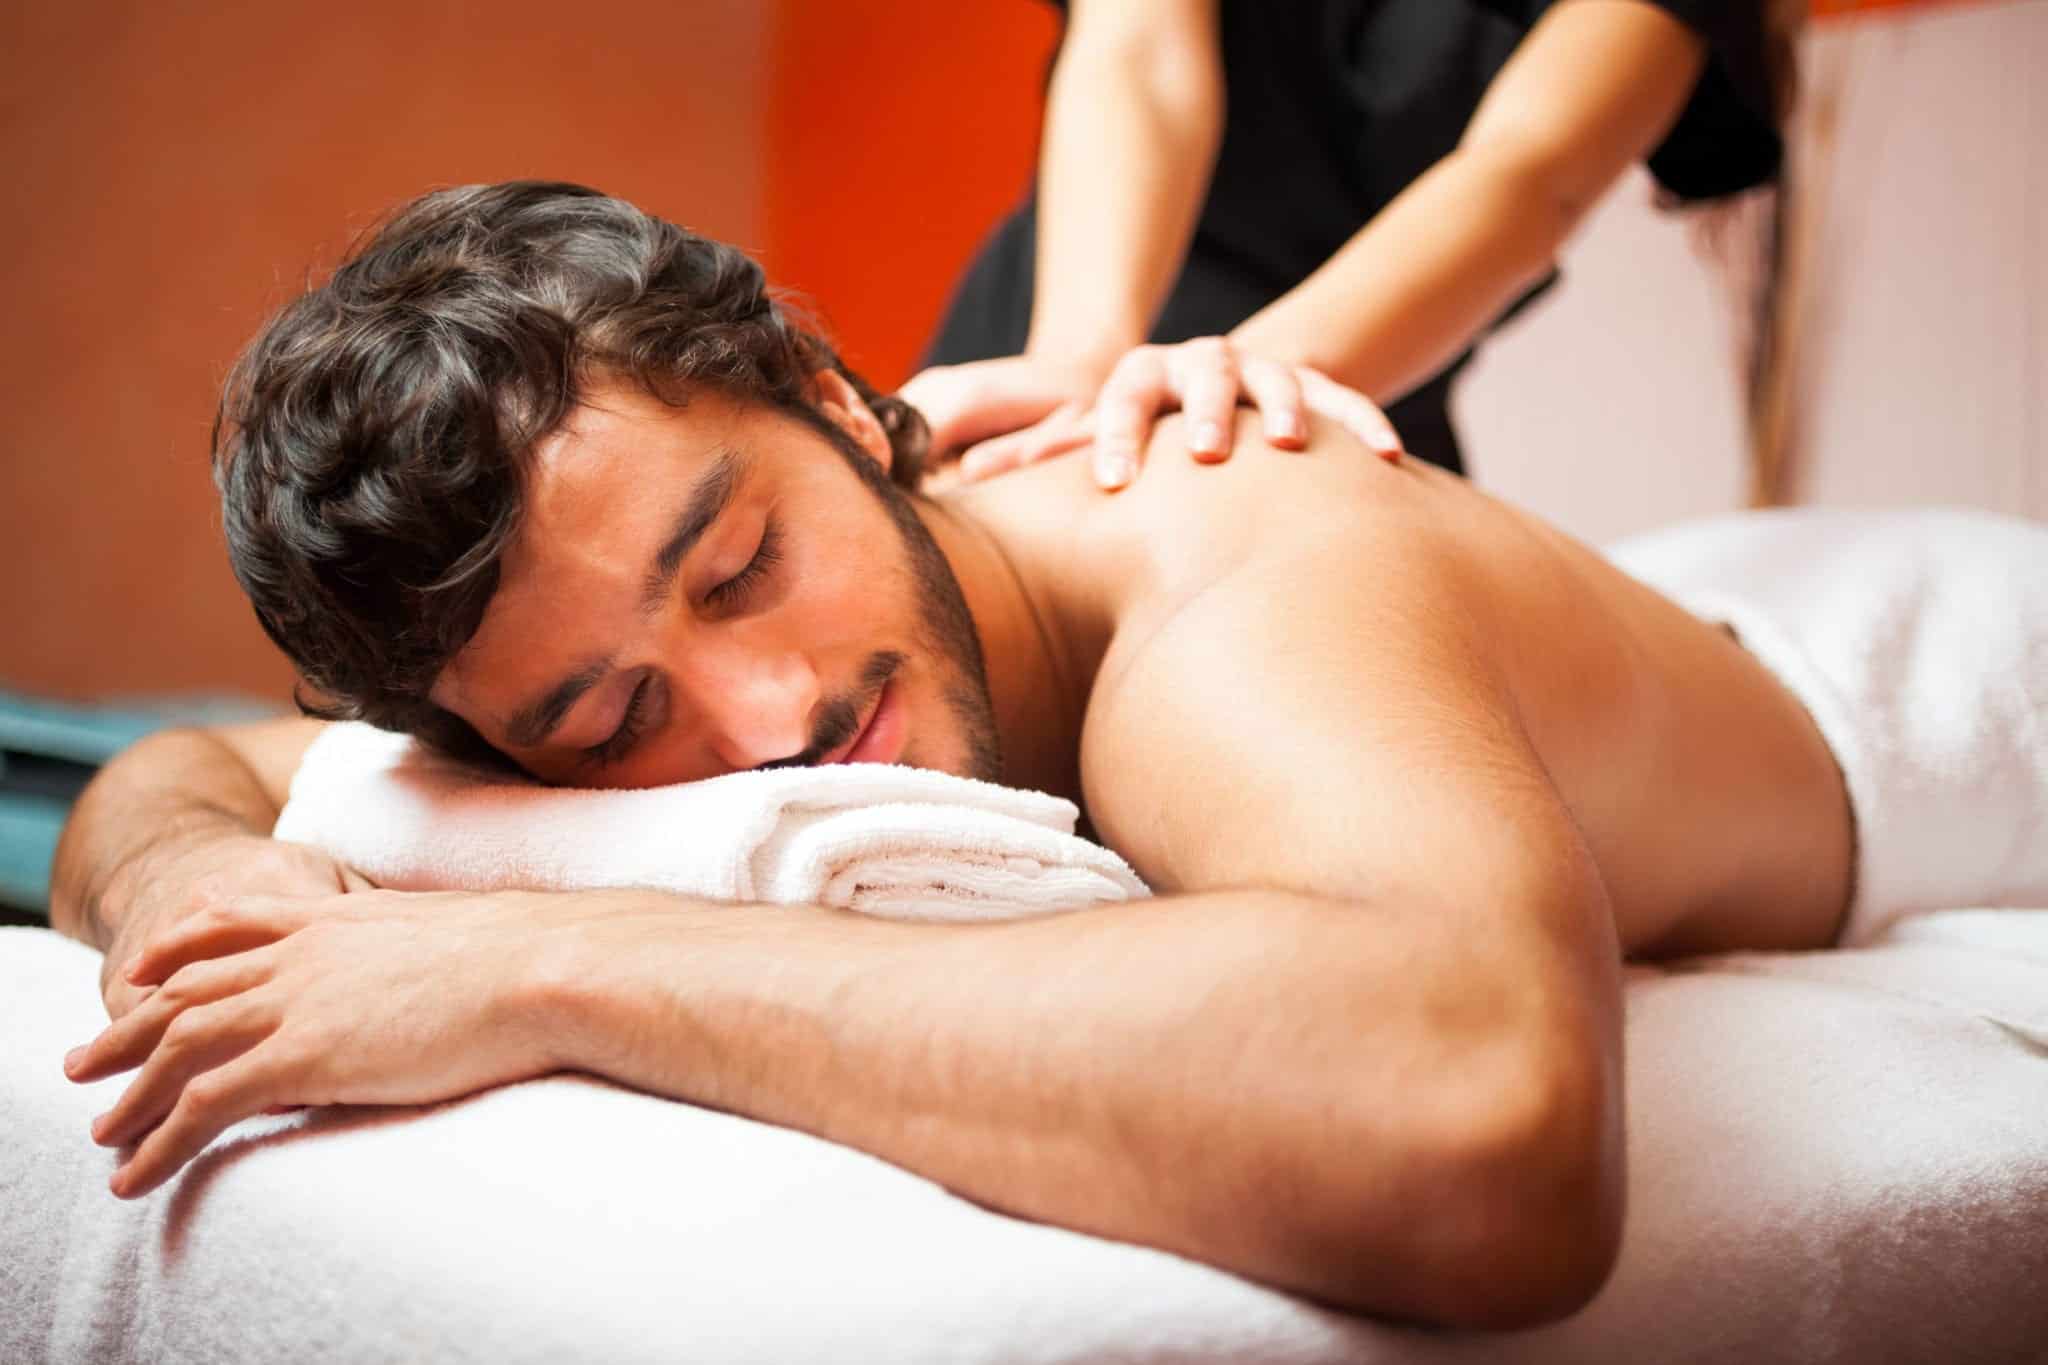 c jeff parker recommends massage parlour in houston pic